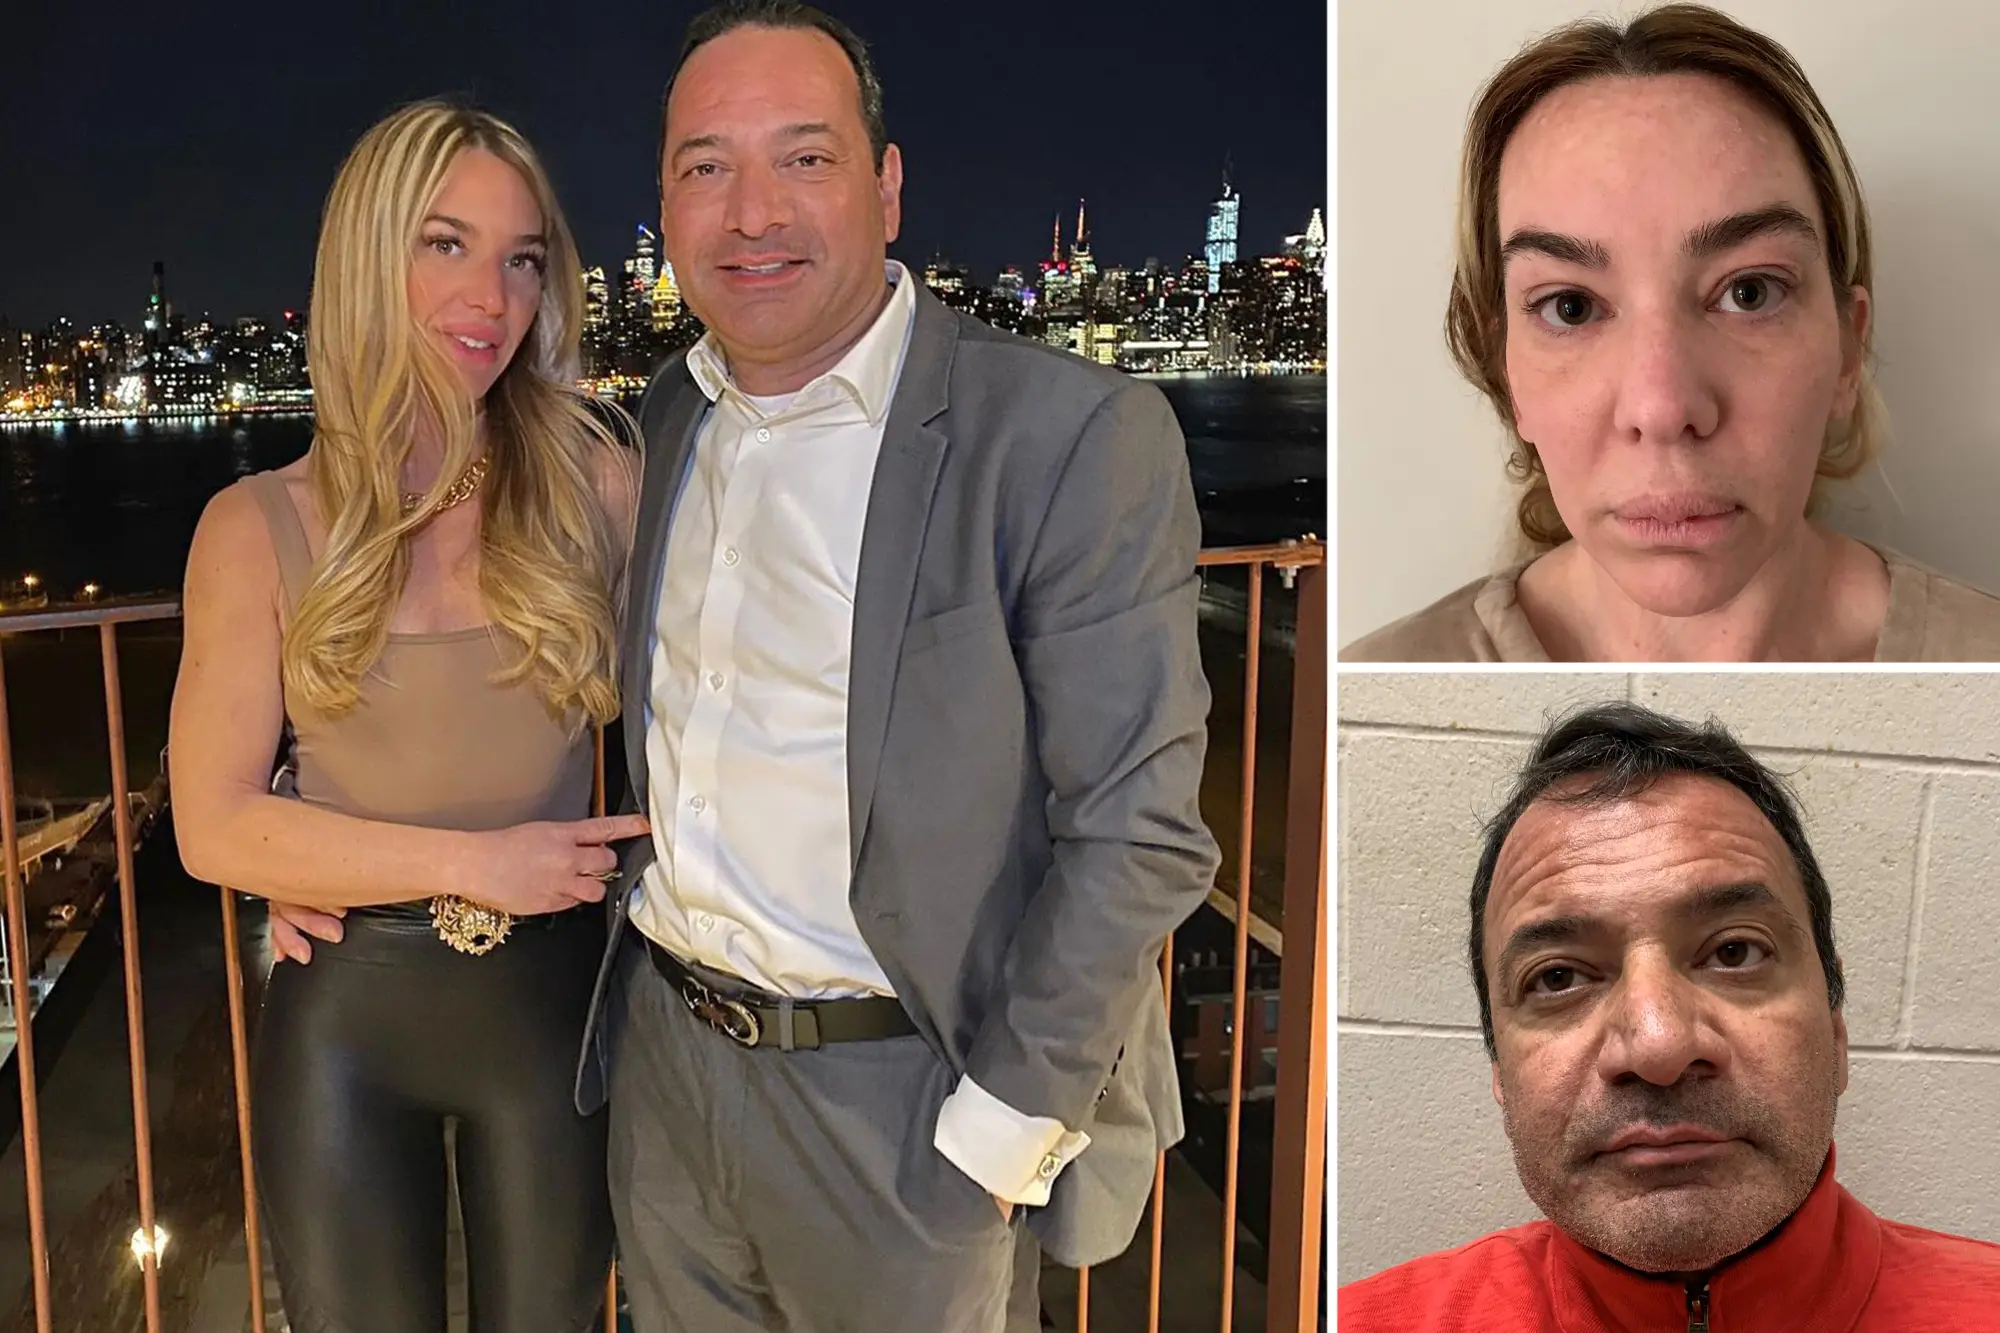 Reality TV Couple Arrested For Prescription Drug Scheme Linked To “Below Deck” Show